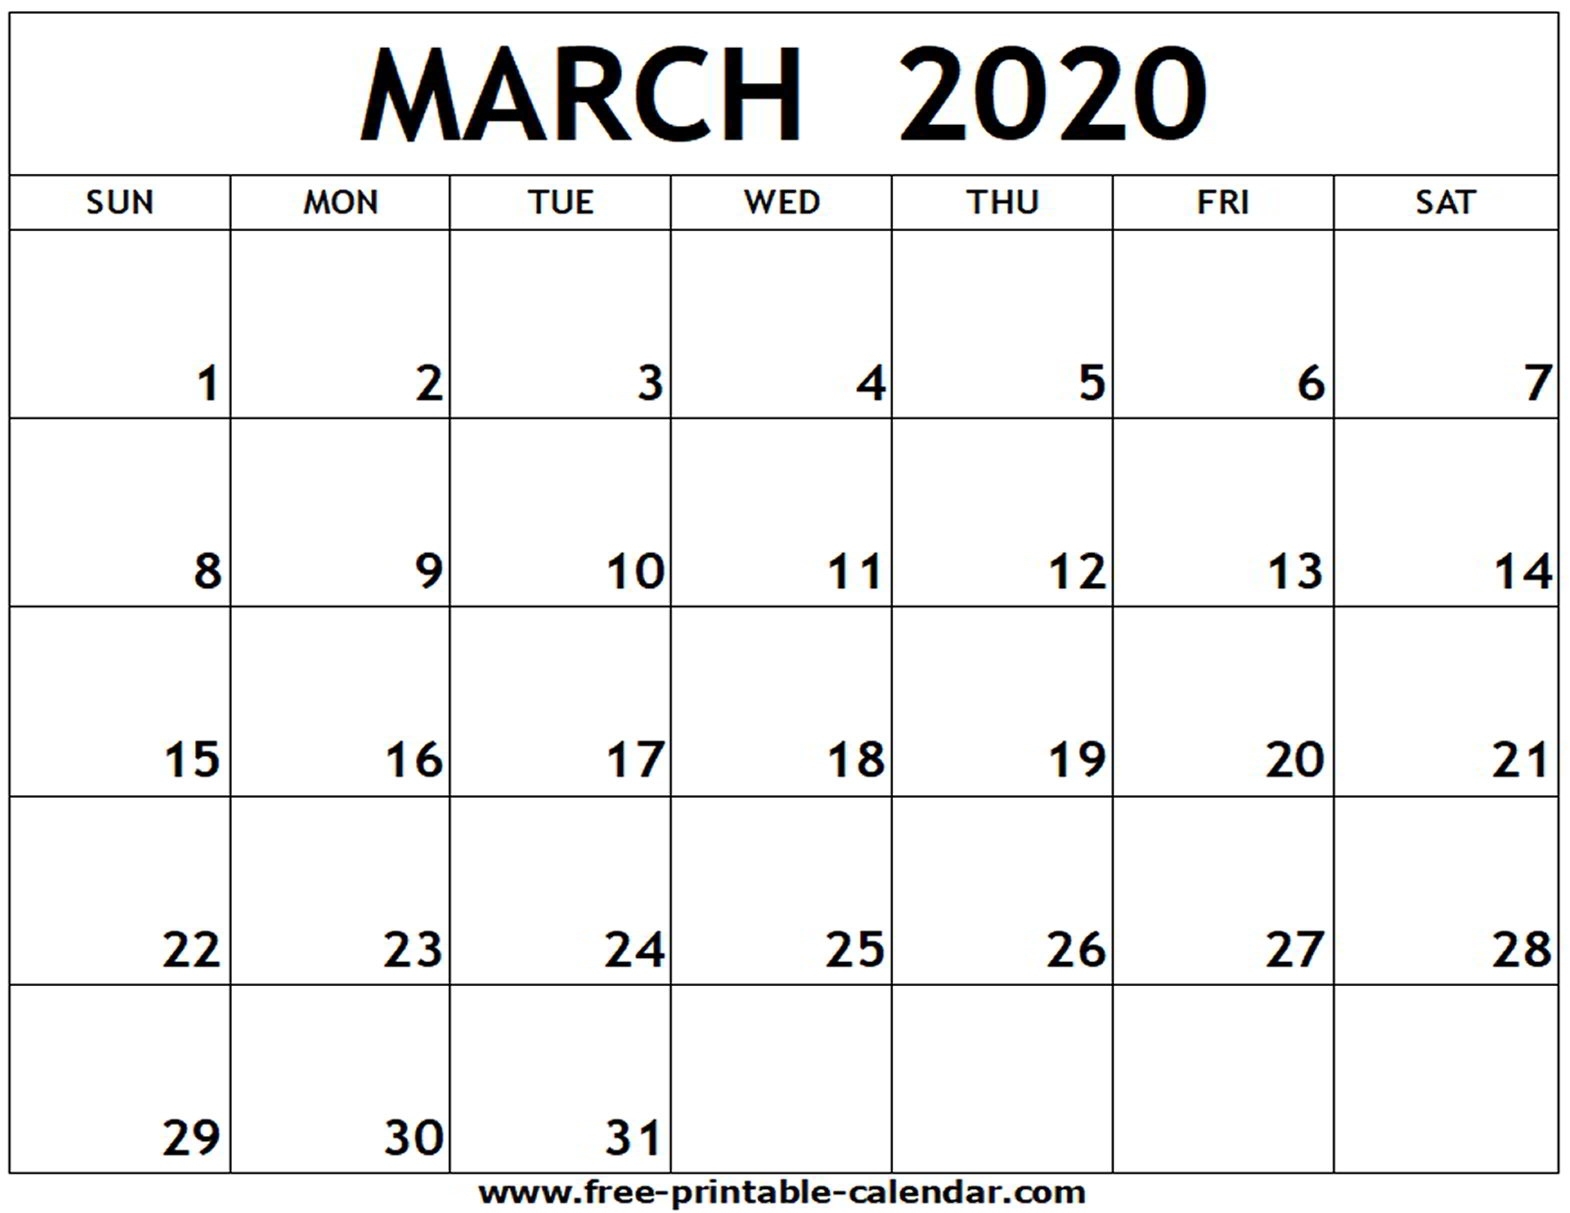 March 2020 Printable Calendar - Free-Printable-Calendar Extraordinary March 2020 Calendar Canada Printable